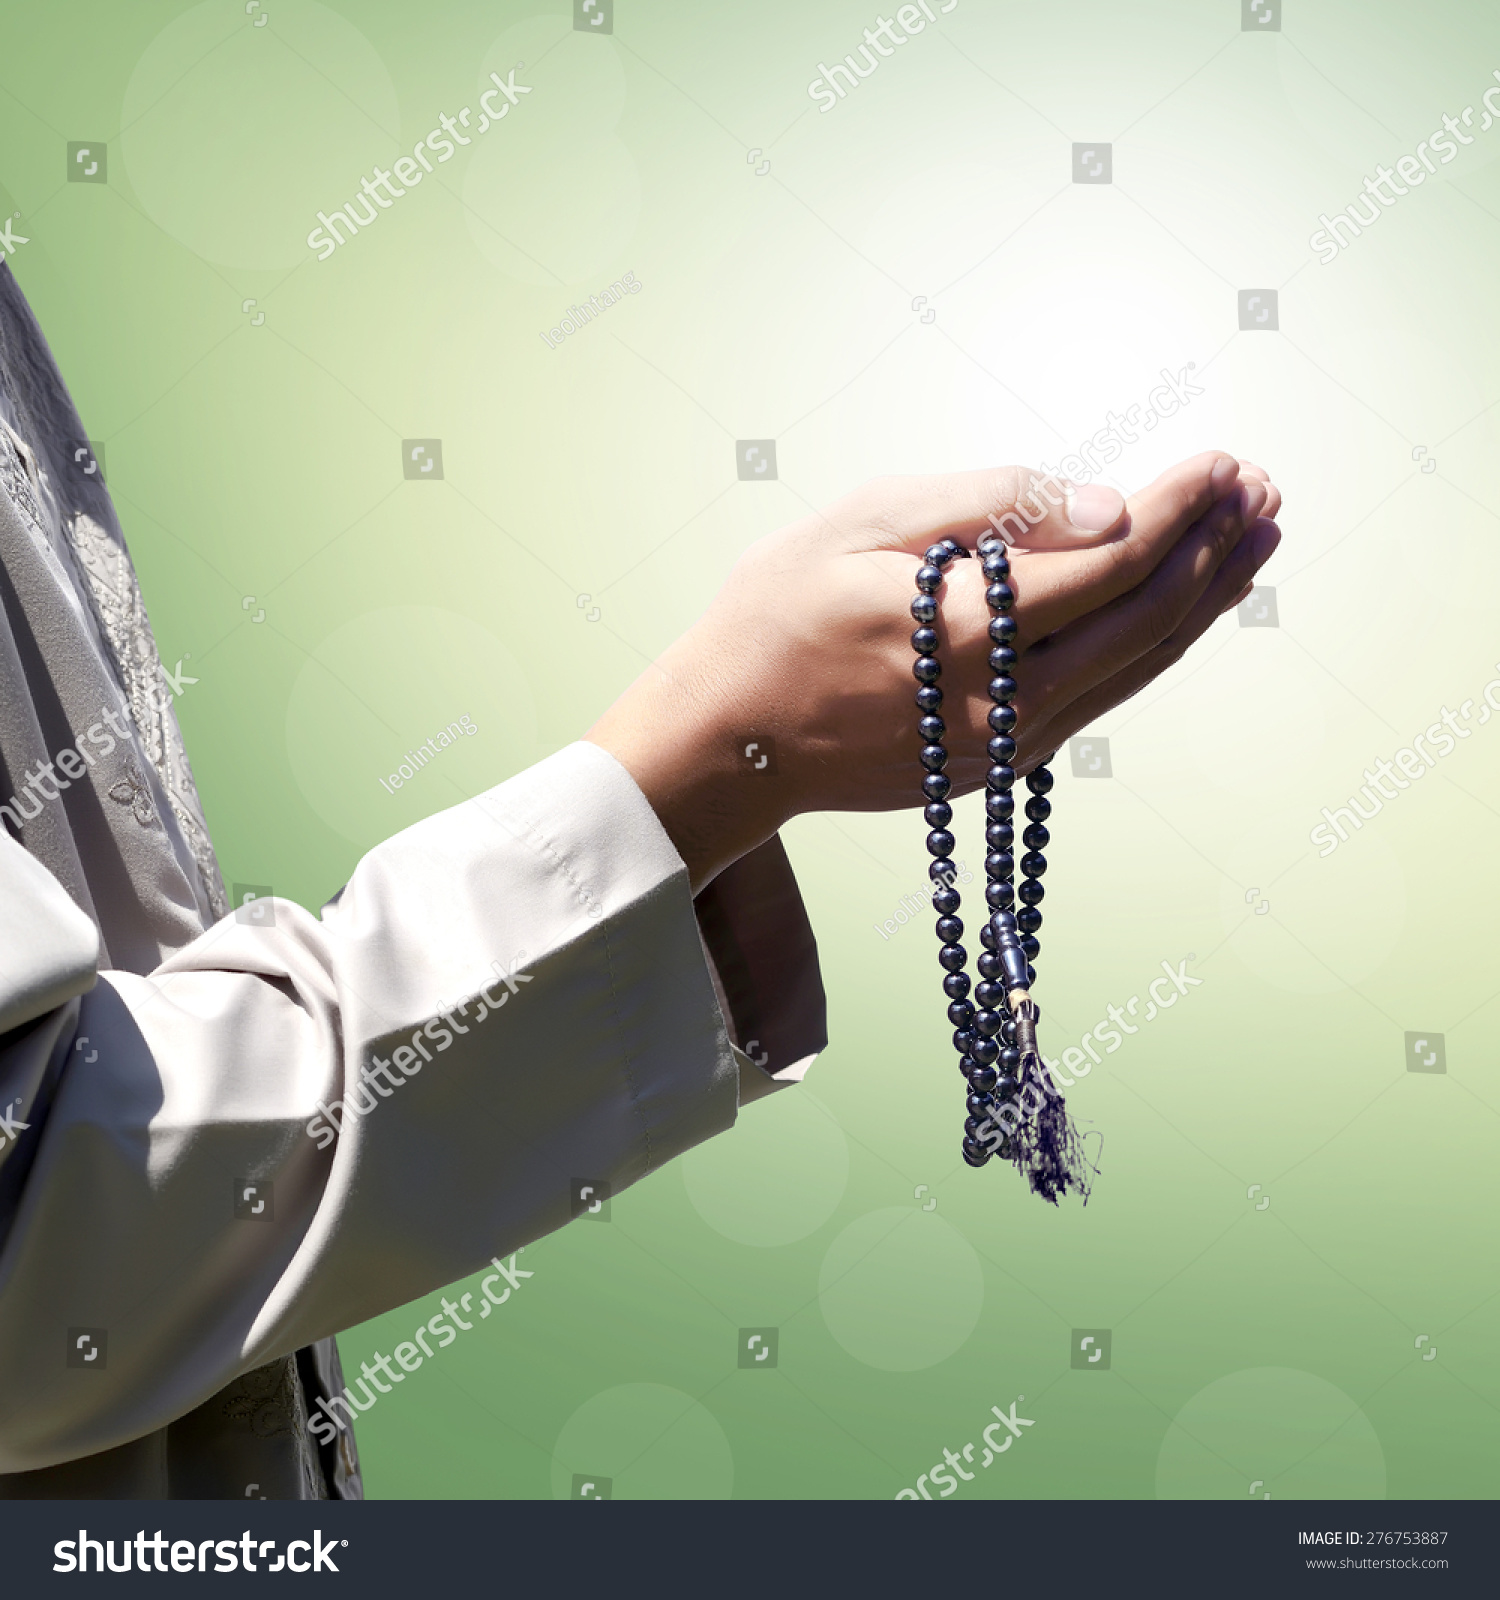 muslim praying hands wallpaper